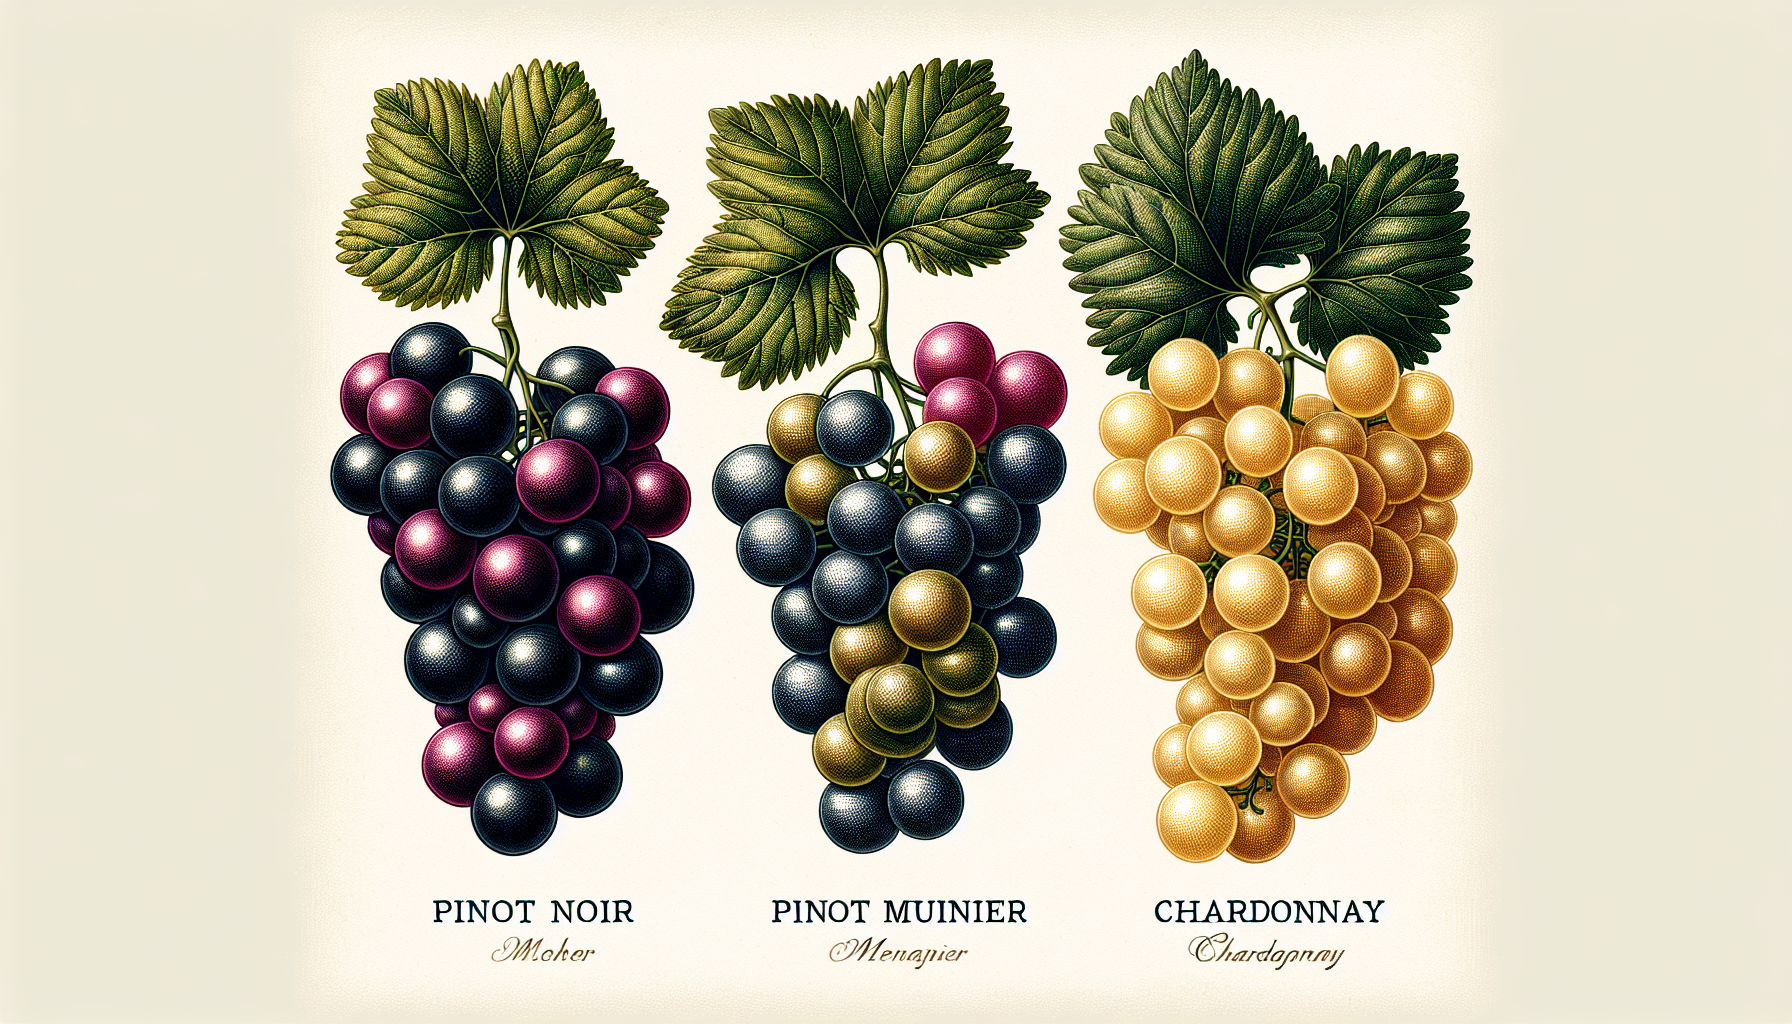 Illustration of Pinot Noir, Pinot Meunier, and Chardonnay grapes